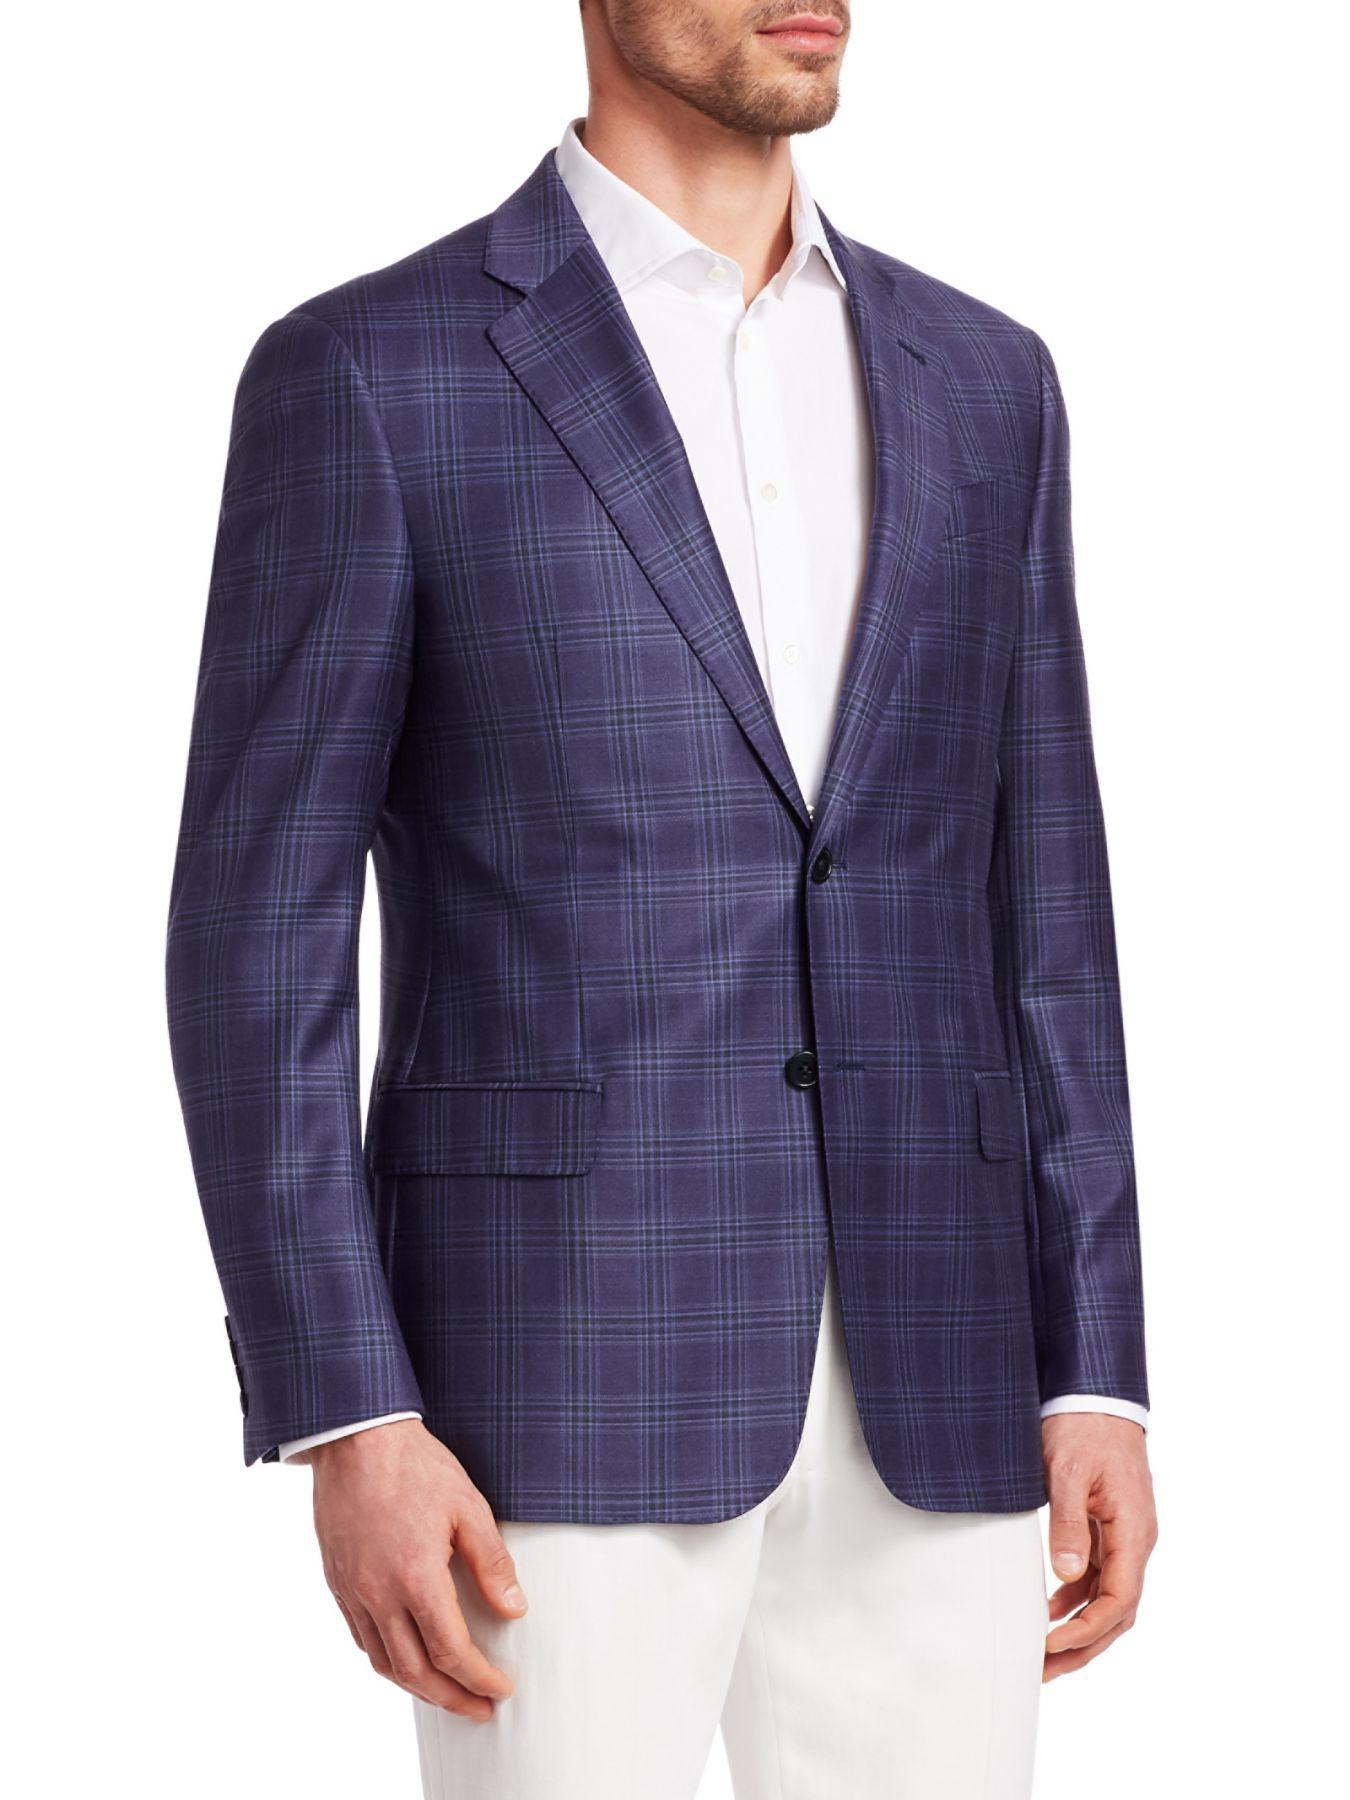 Emporio Armani Plaid G Line Wool Sport Coat in Purple for Men - Lyst